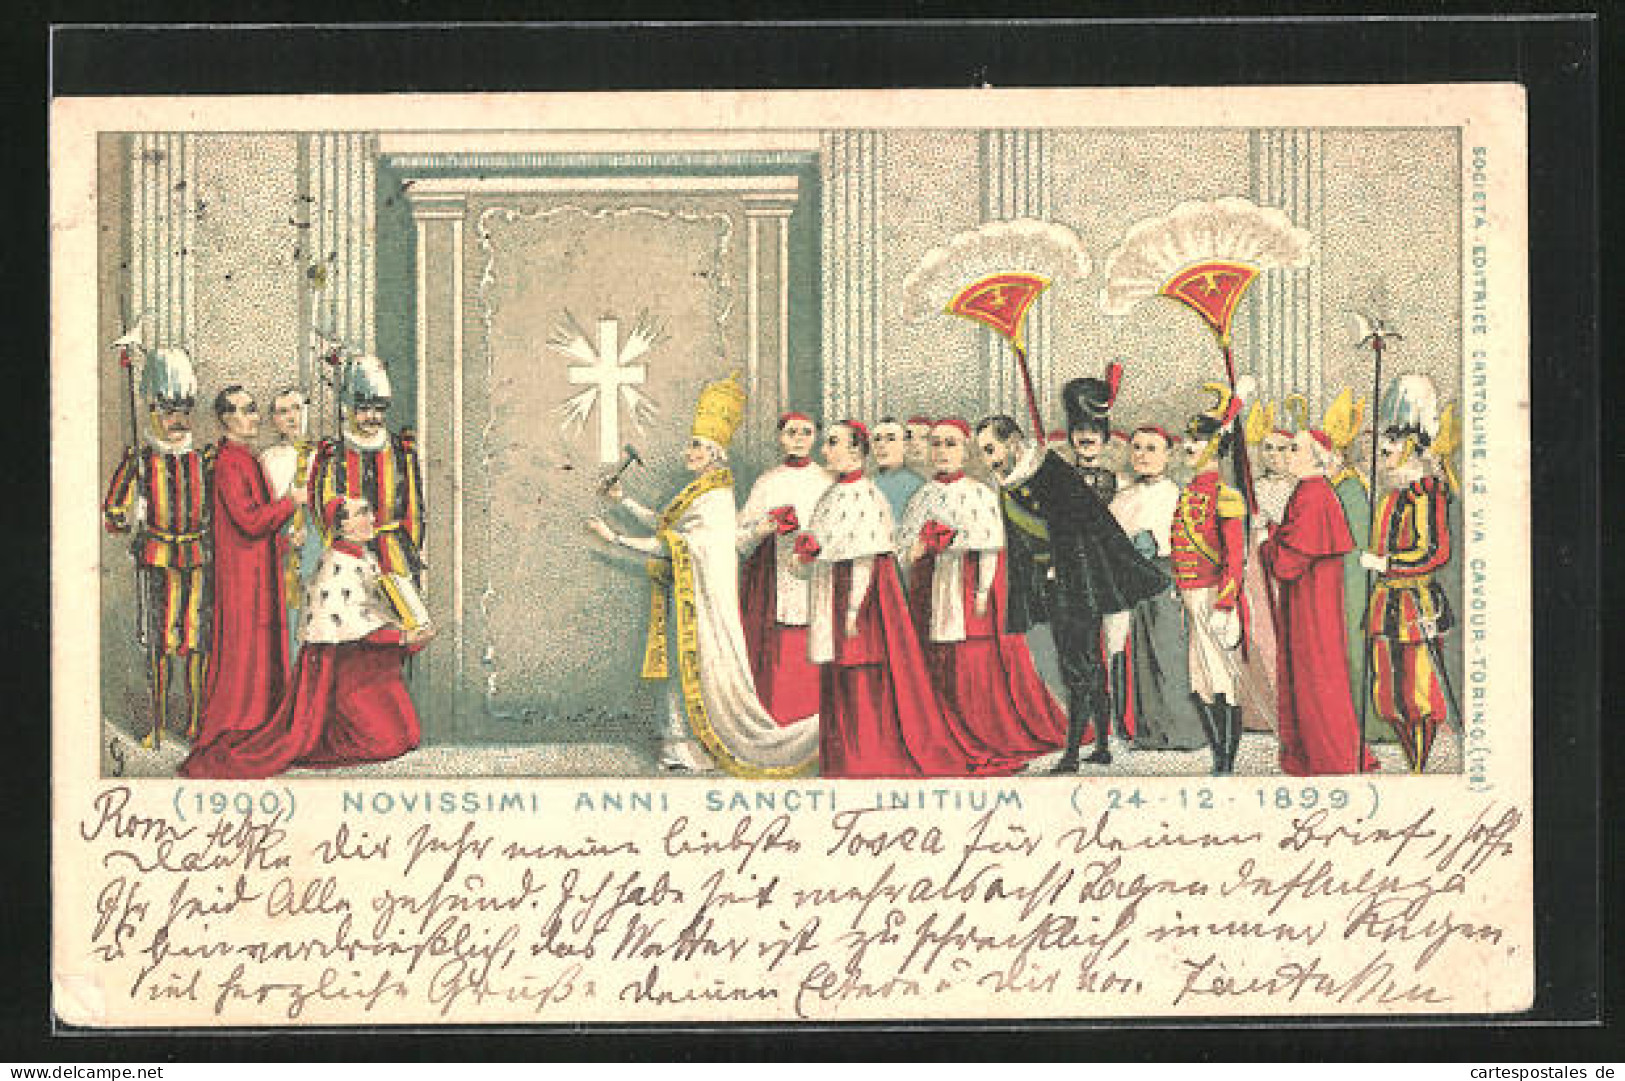 Lithographie Novissimi Anni Sancti Initium 24.12.1899, Papst Leo XIII.  - Päpste